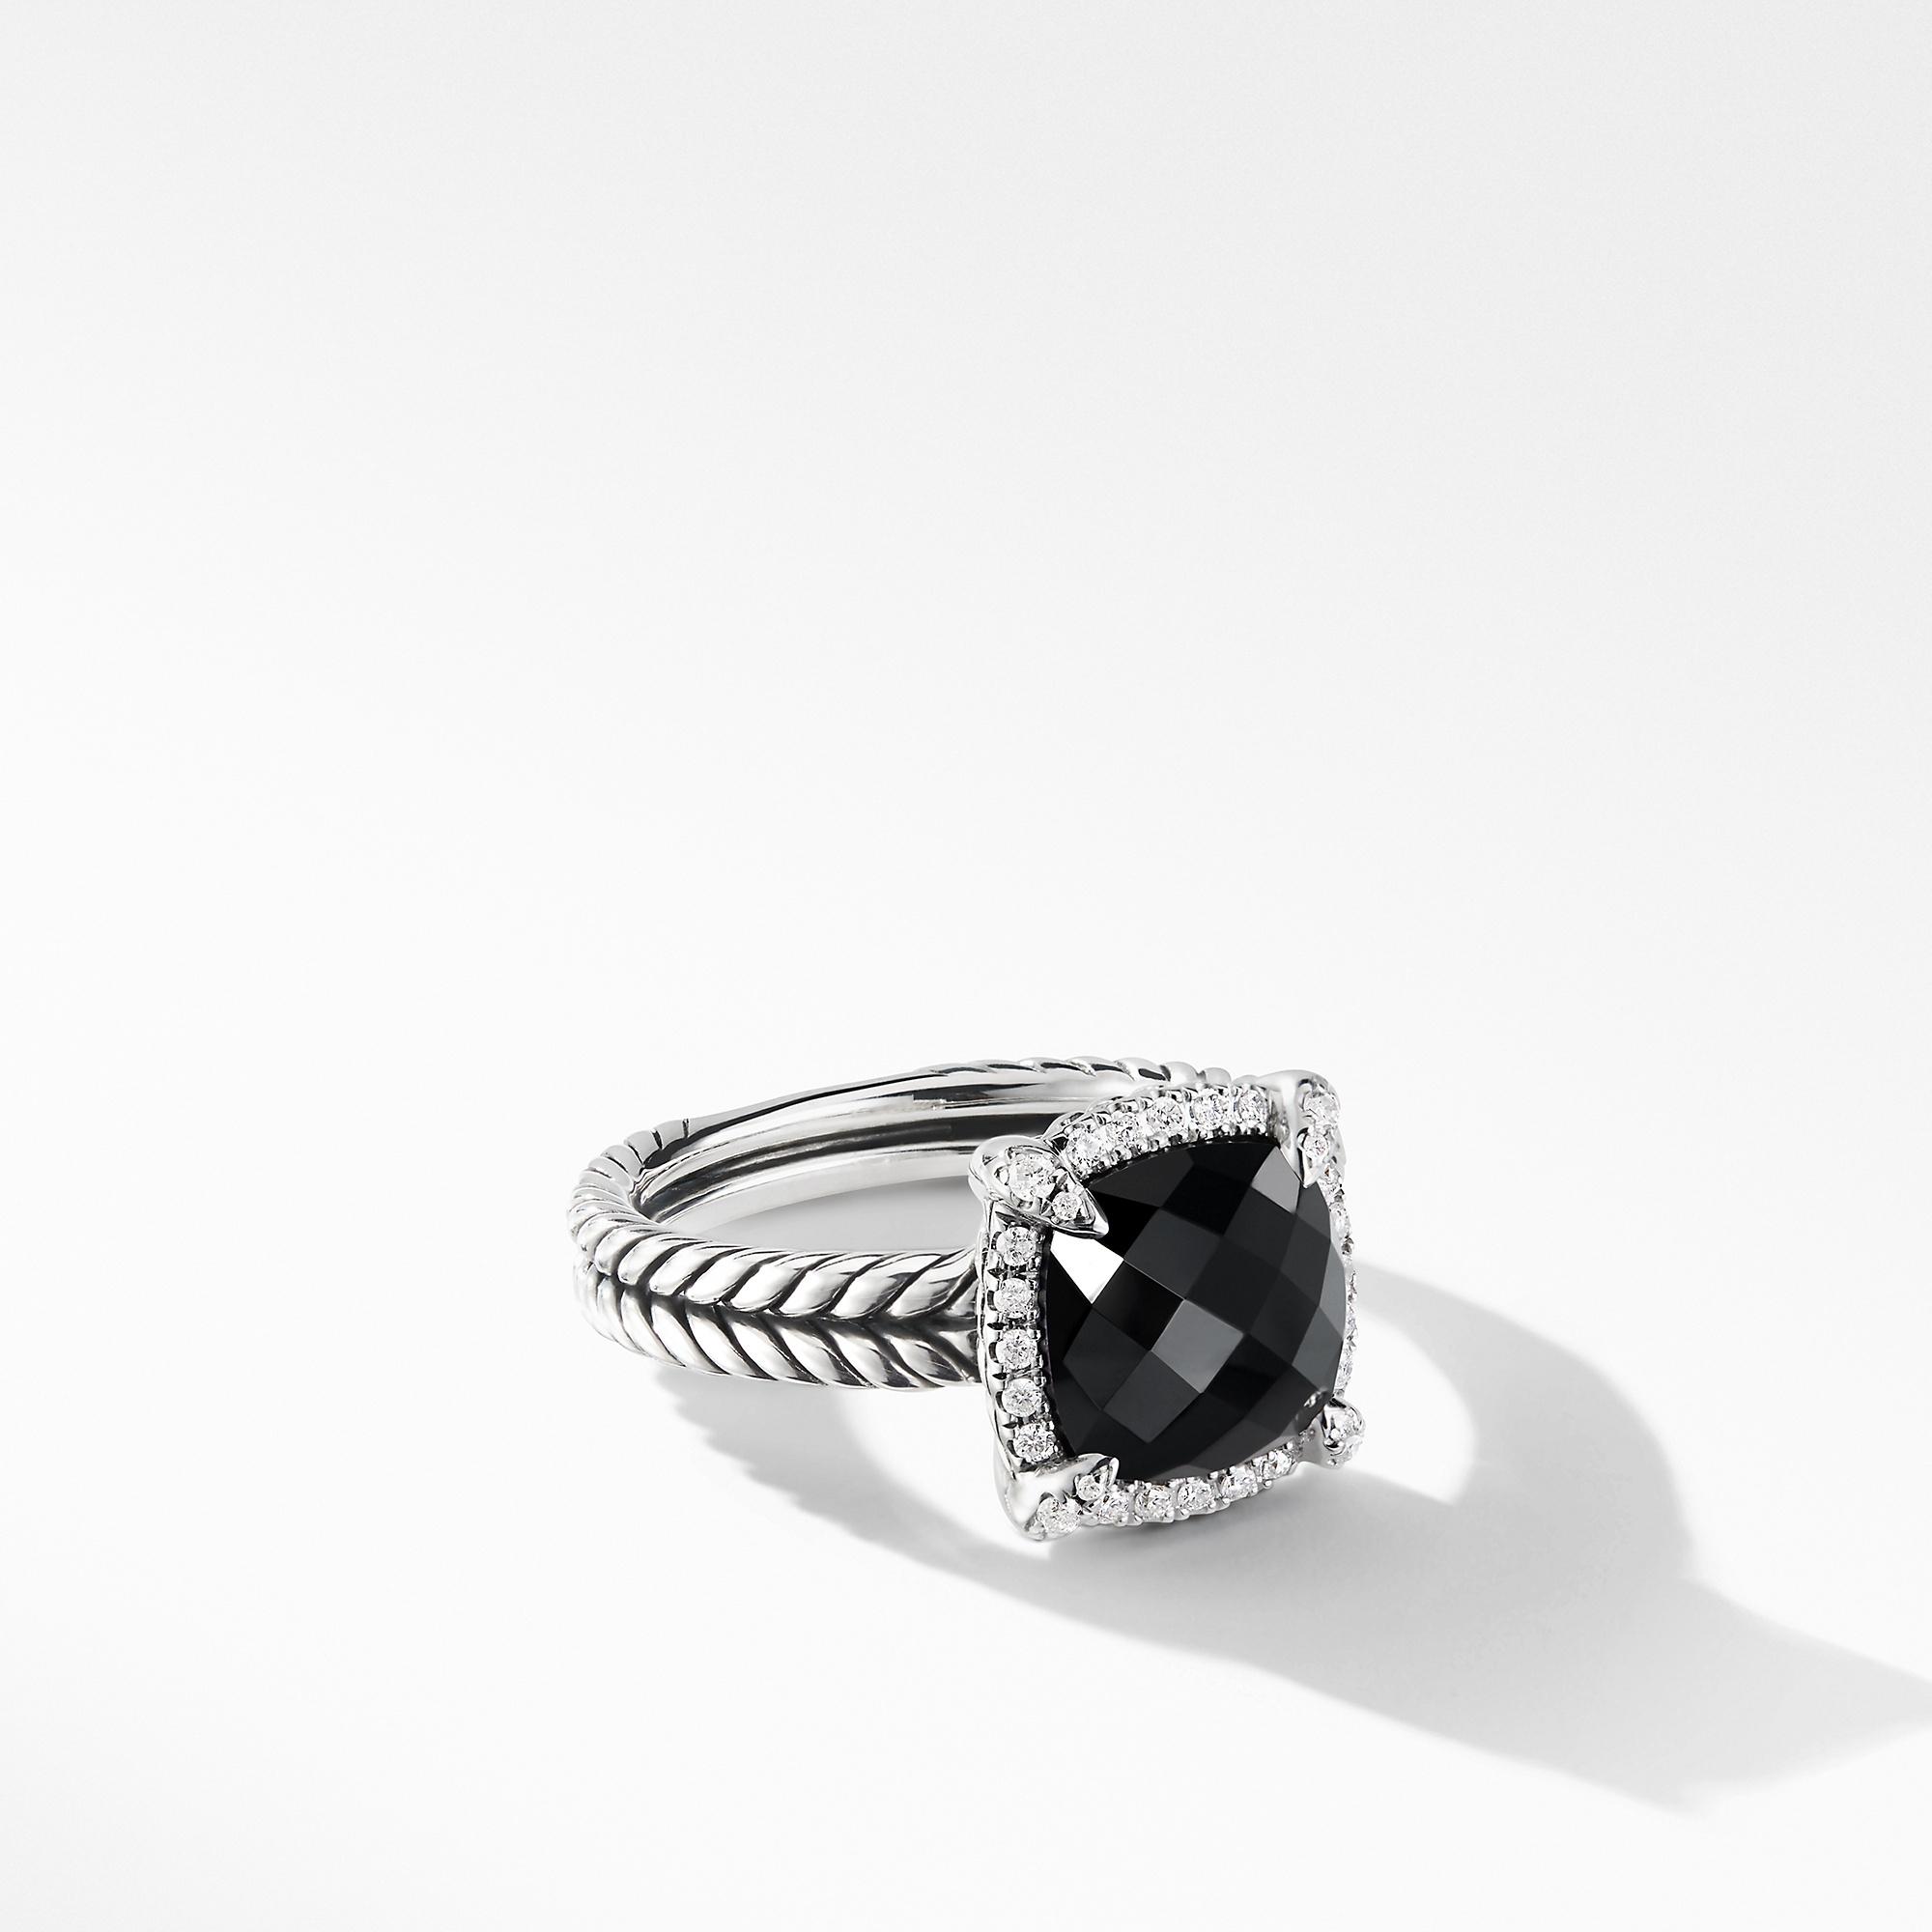 David Yurman Chatelaine Pave Bezel Ring with Black Onyx and Diamonds, size 7